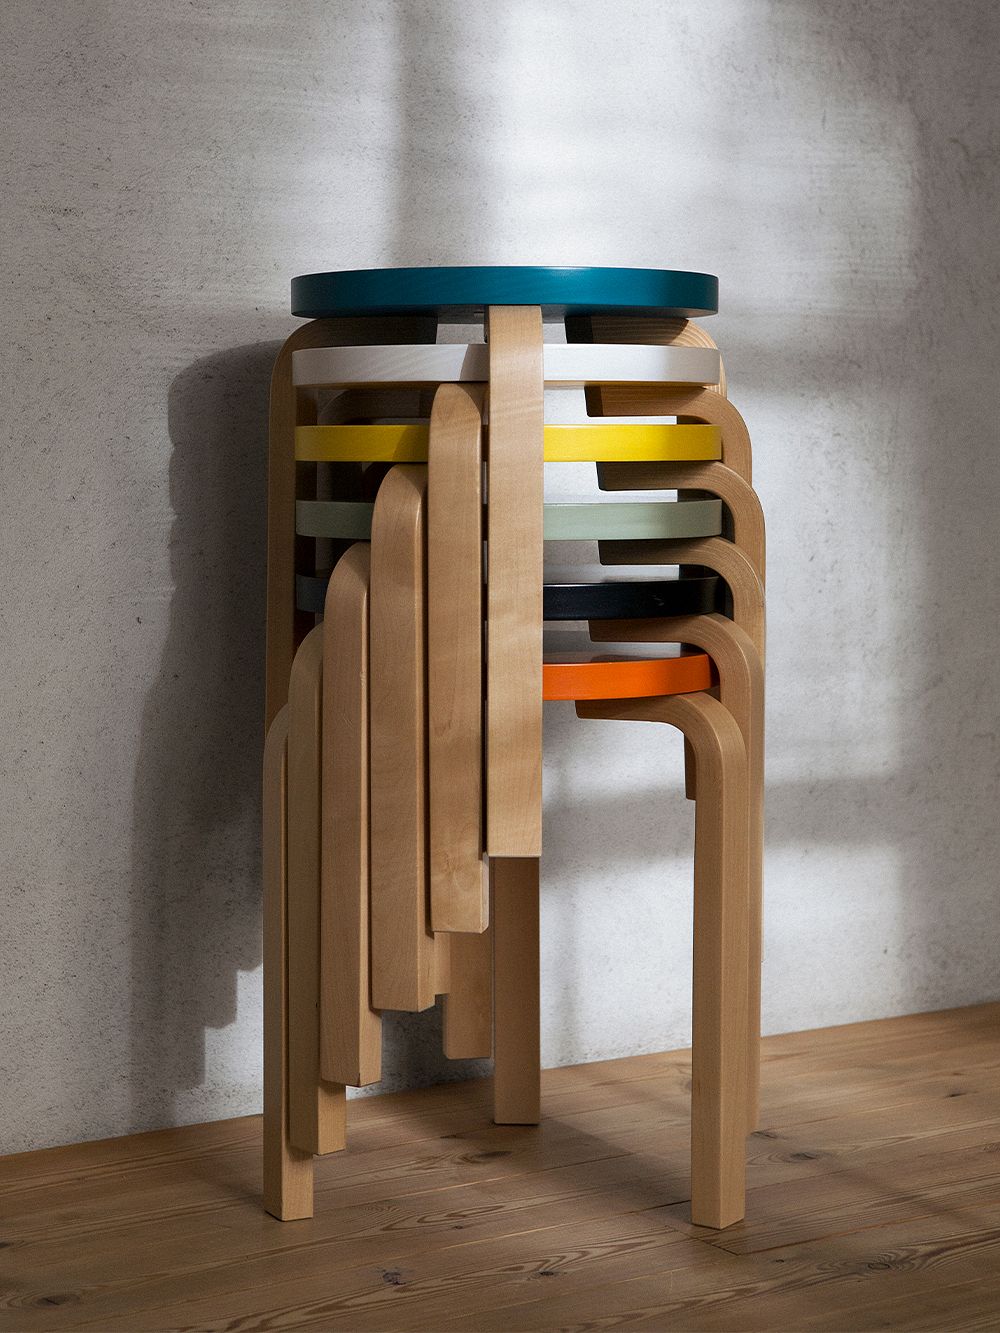 Artek Aalto 60 stools stacked